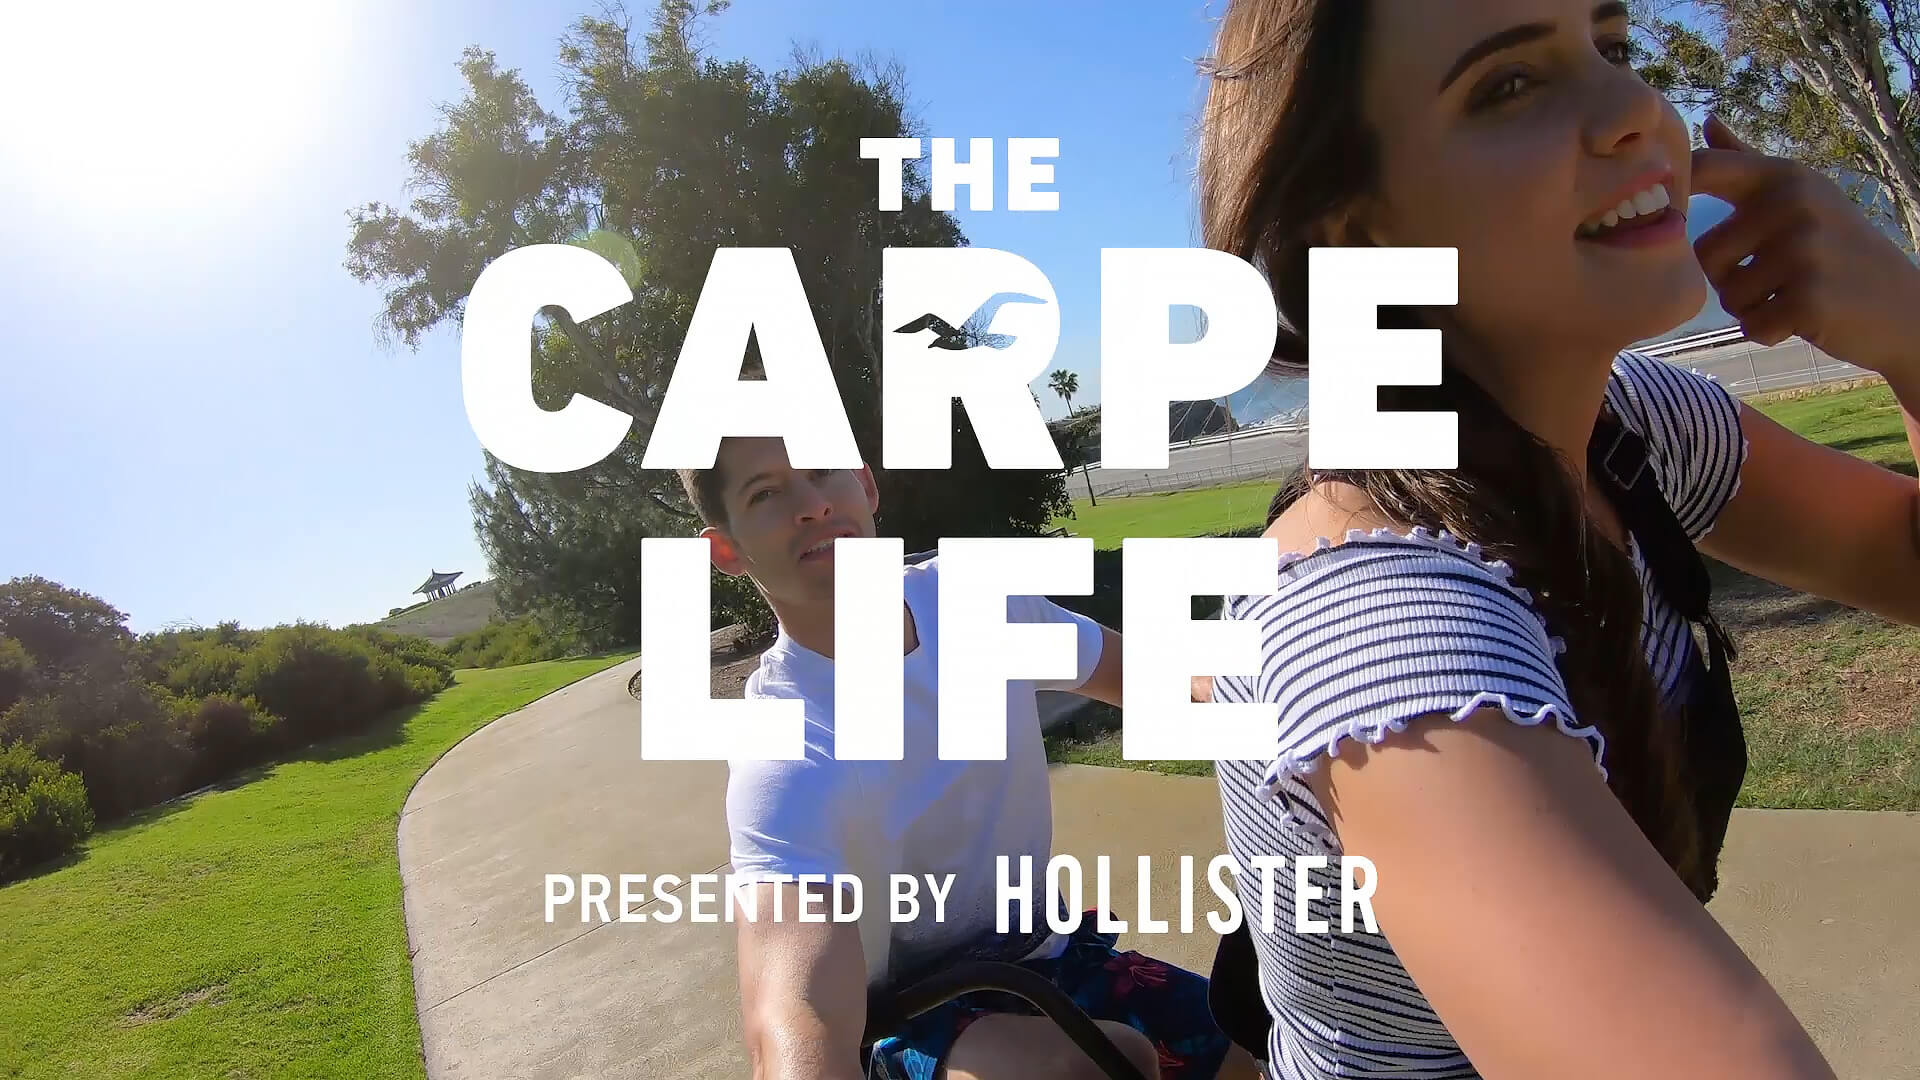 Hollister Co.'s Carpe Life video